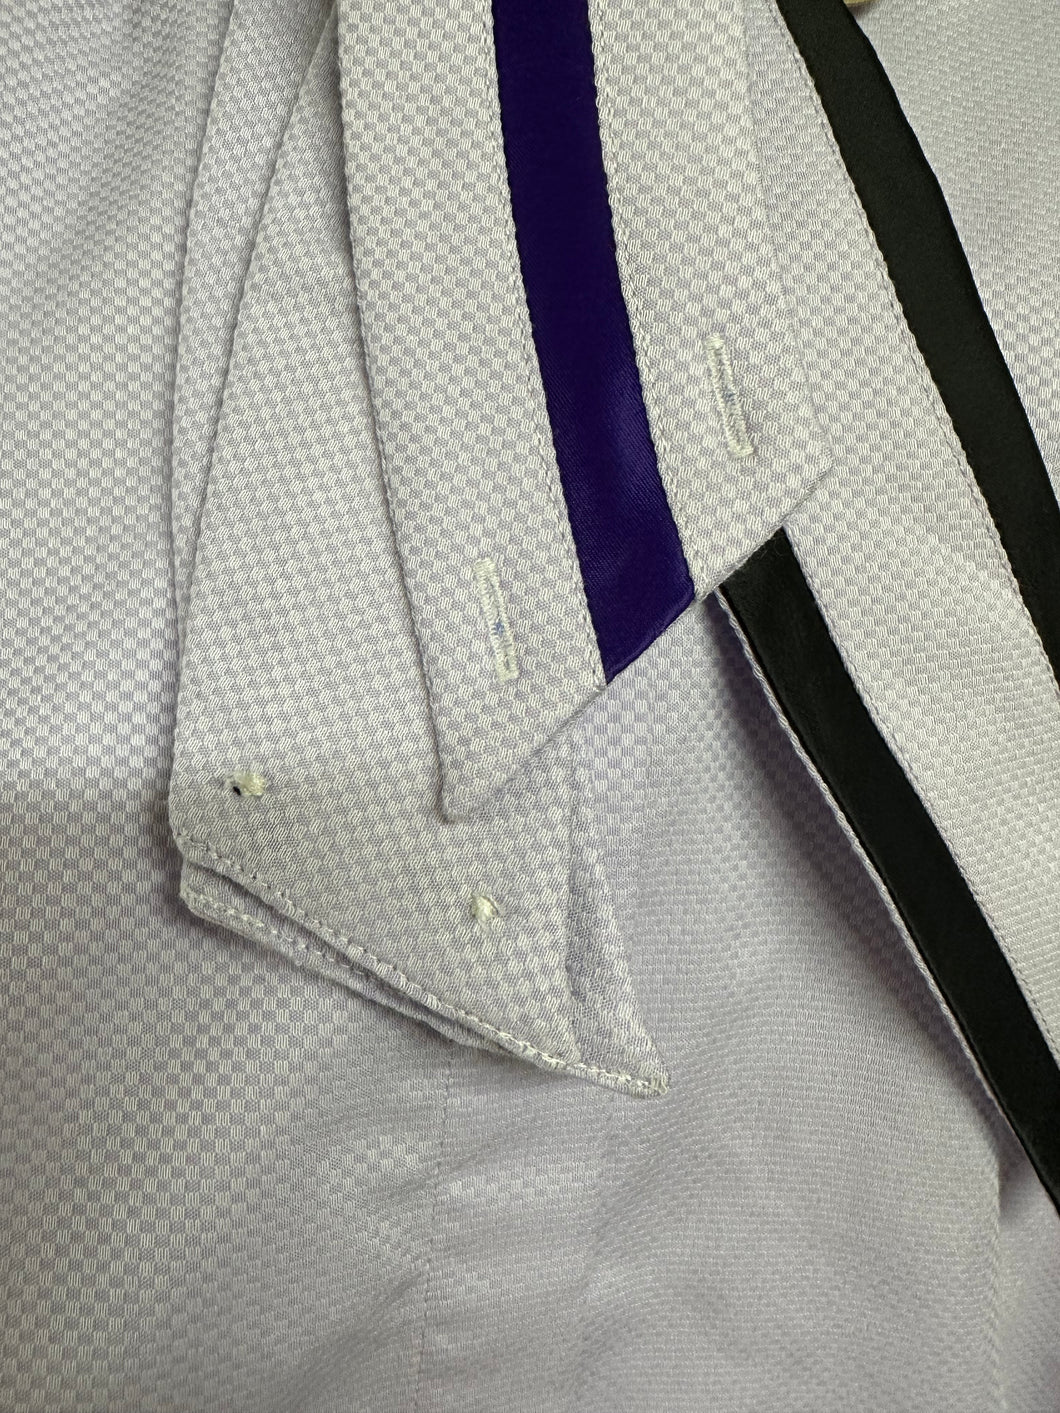 Light Purple: 2 Collars - Size 34